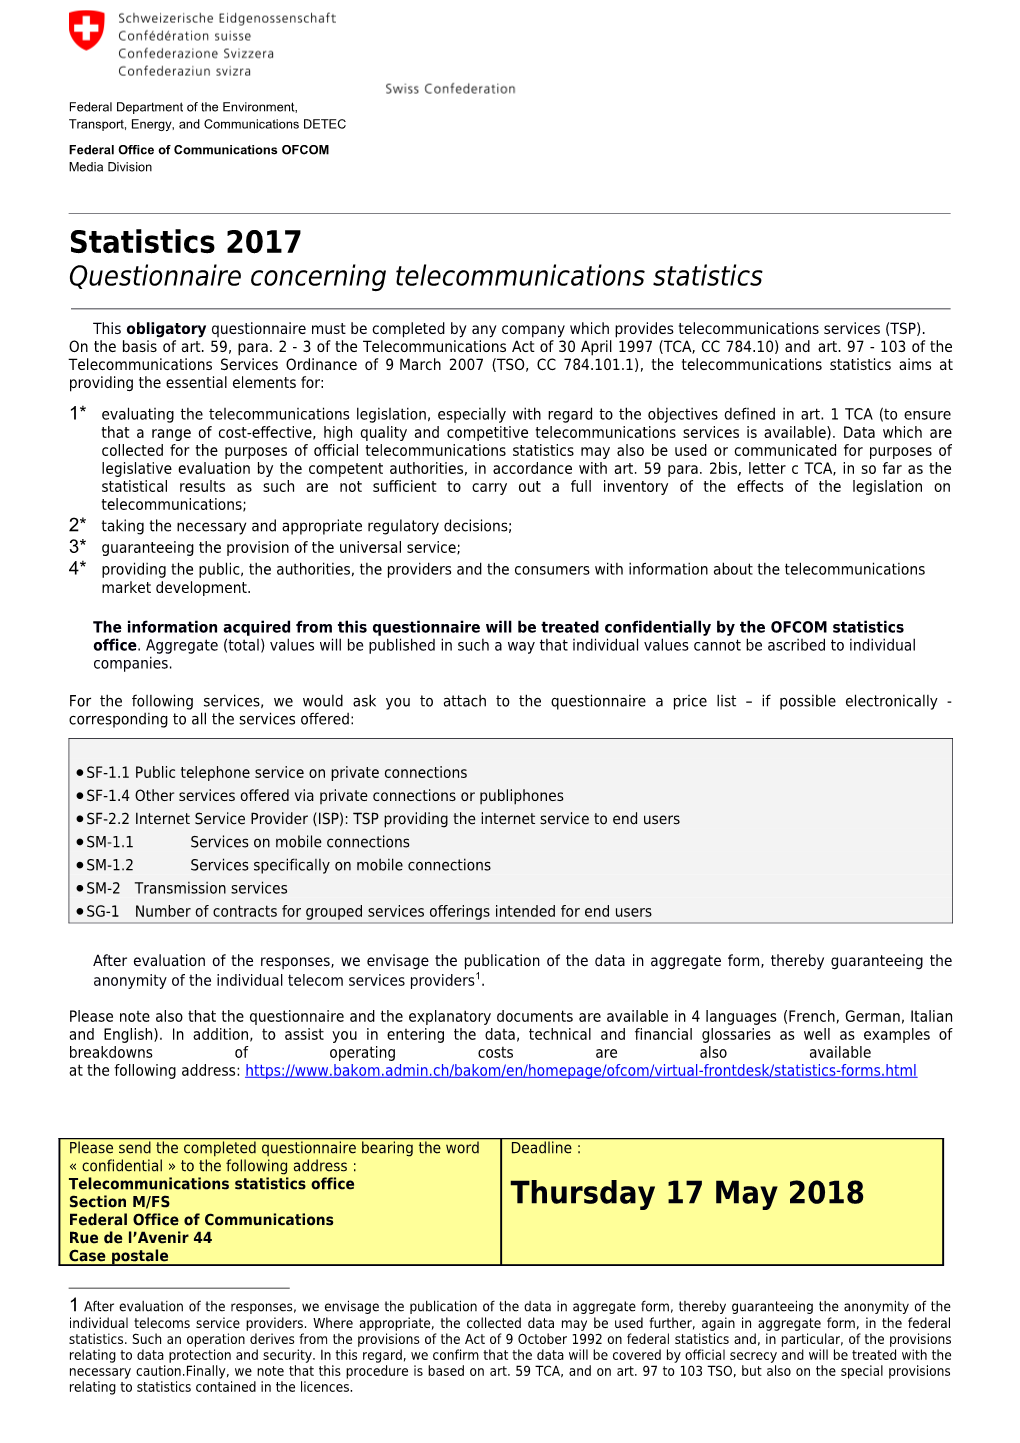 Questionnaire Concerning Telecommunications Statistics